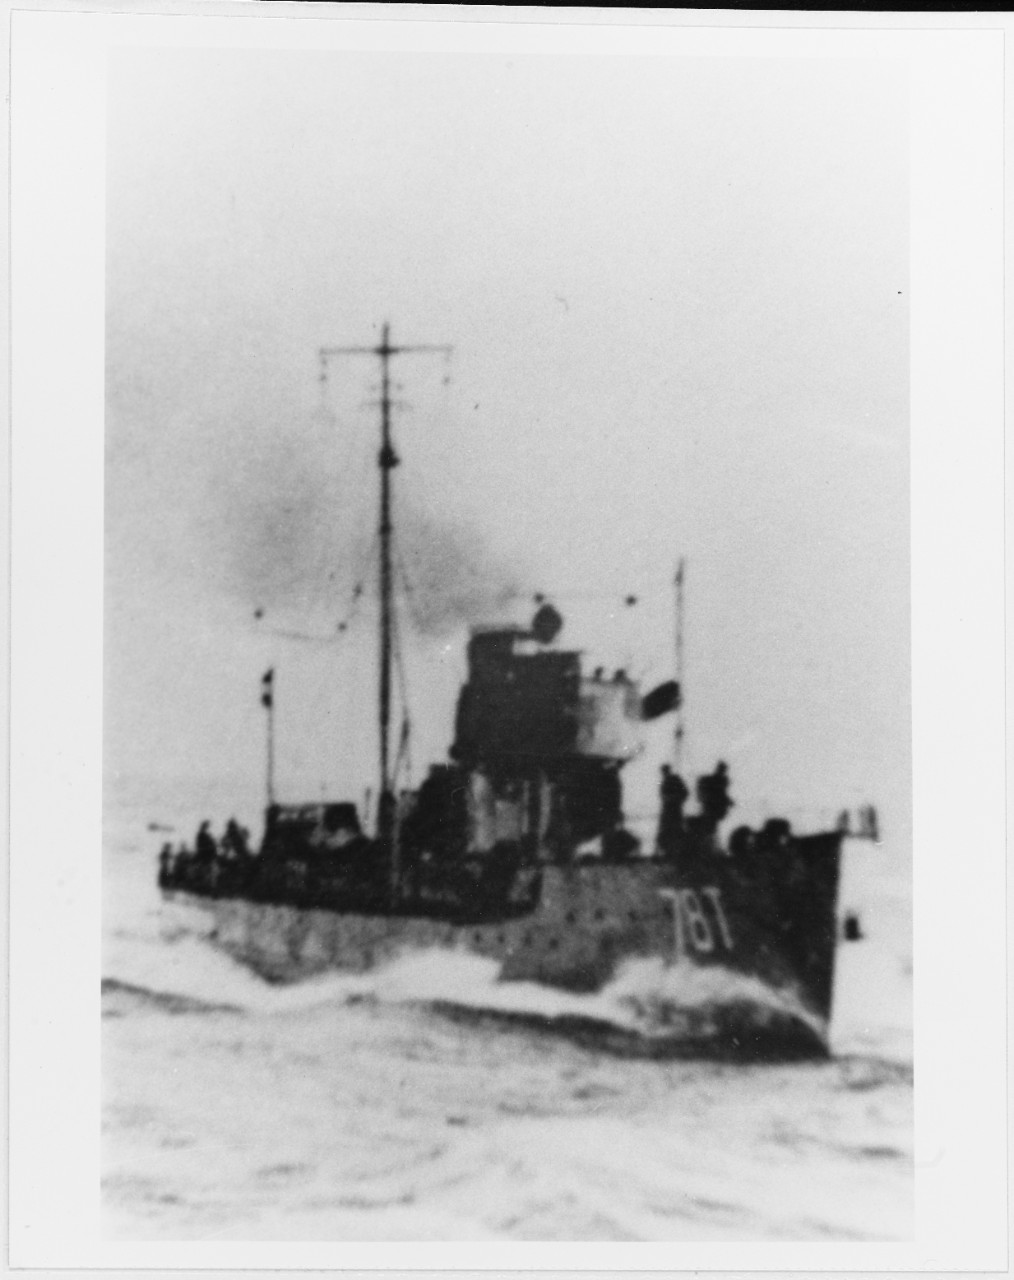 78T (Austrian Torpedo Boat, 1914-1945)